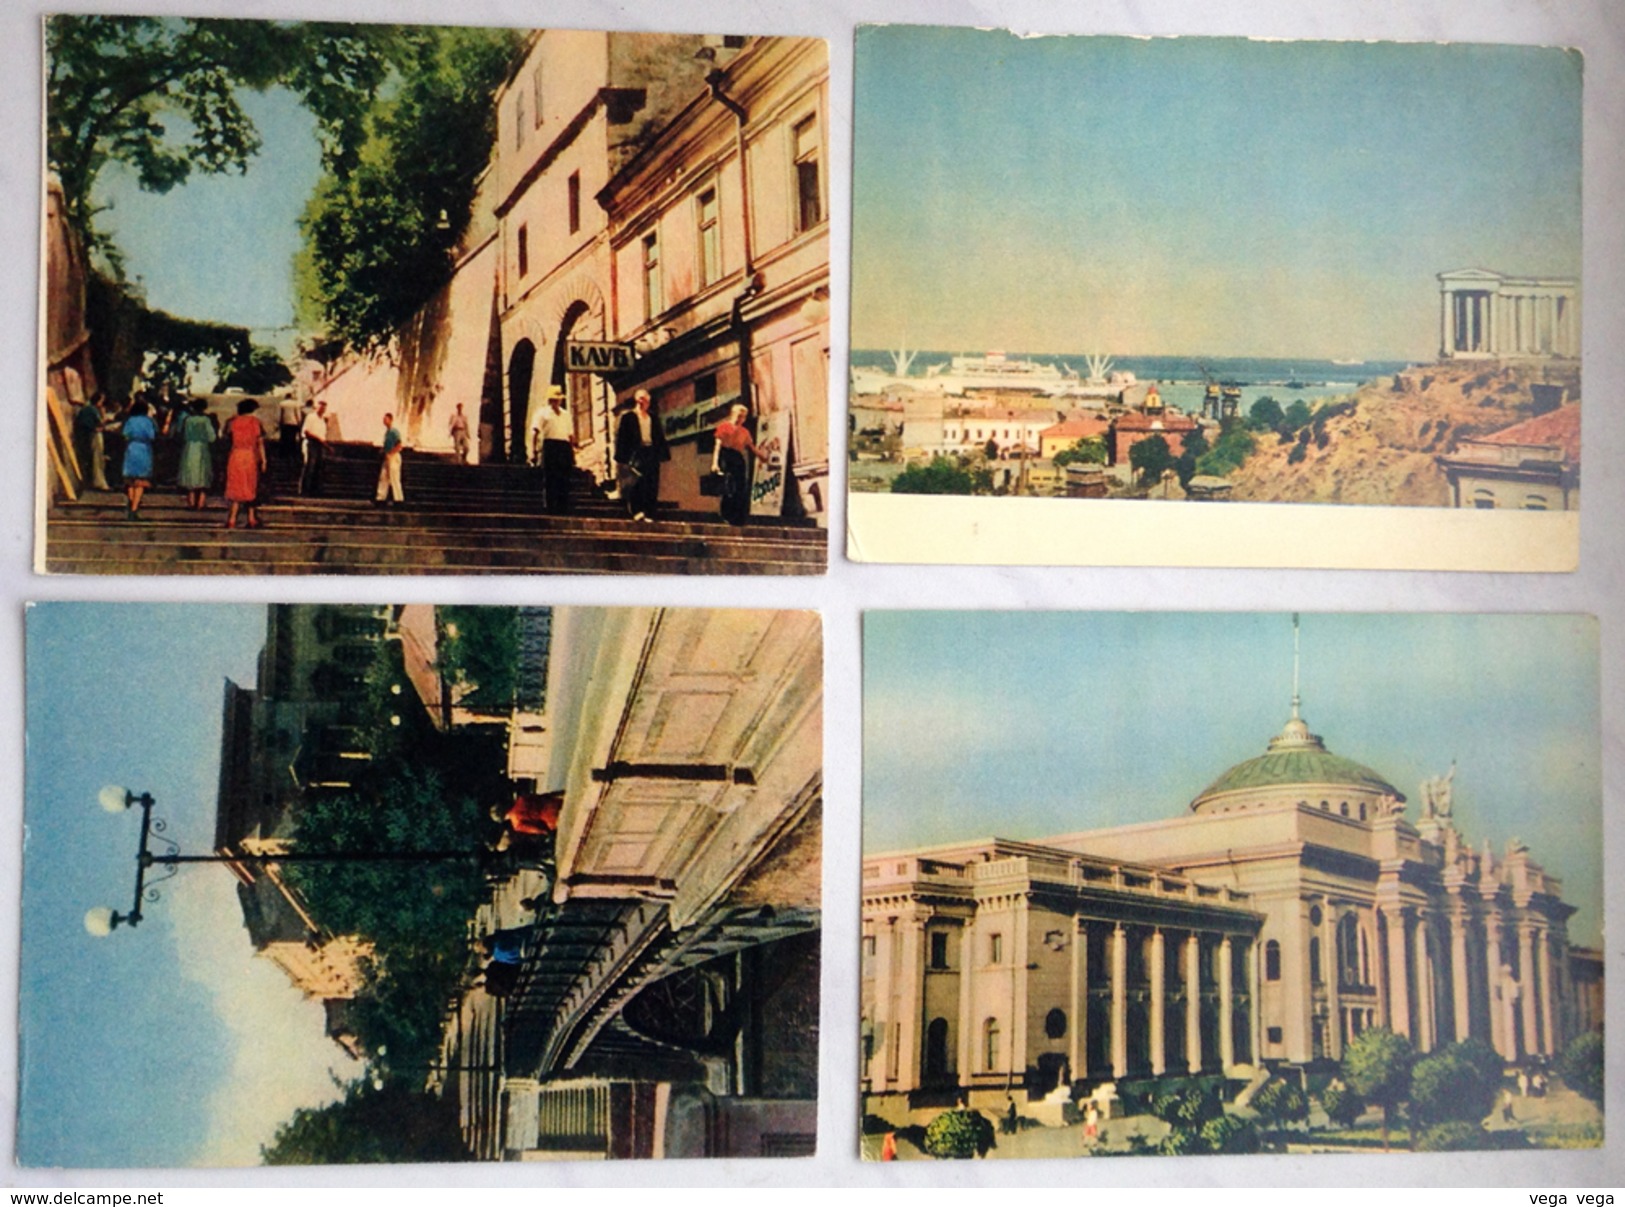 Odessa. 28 postcards. Complete set of 1959